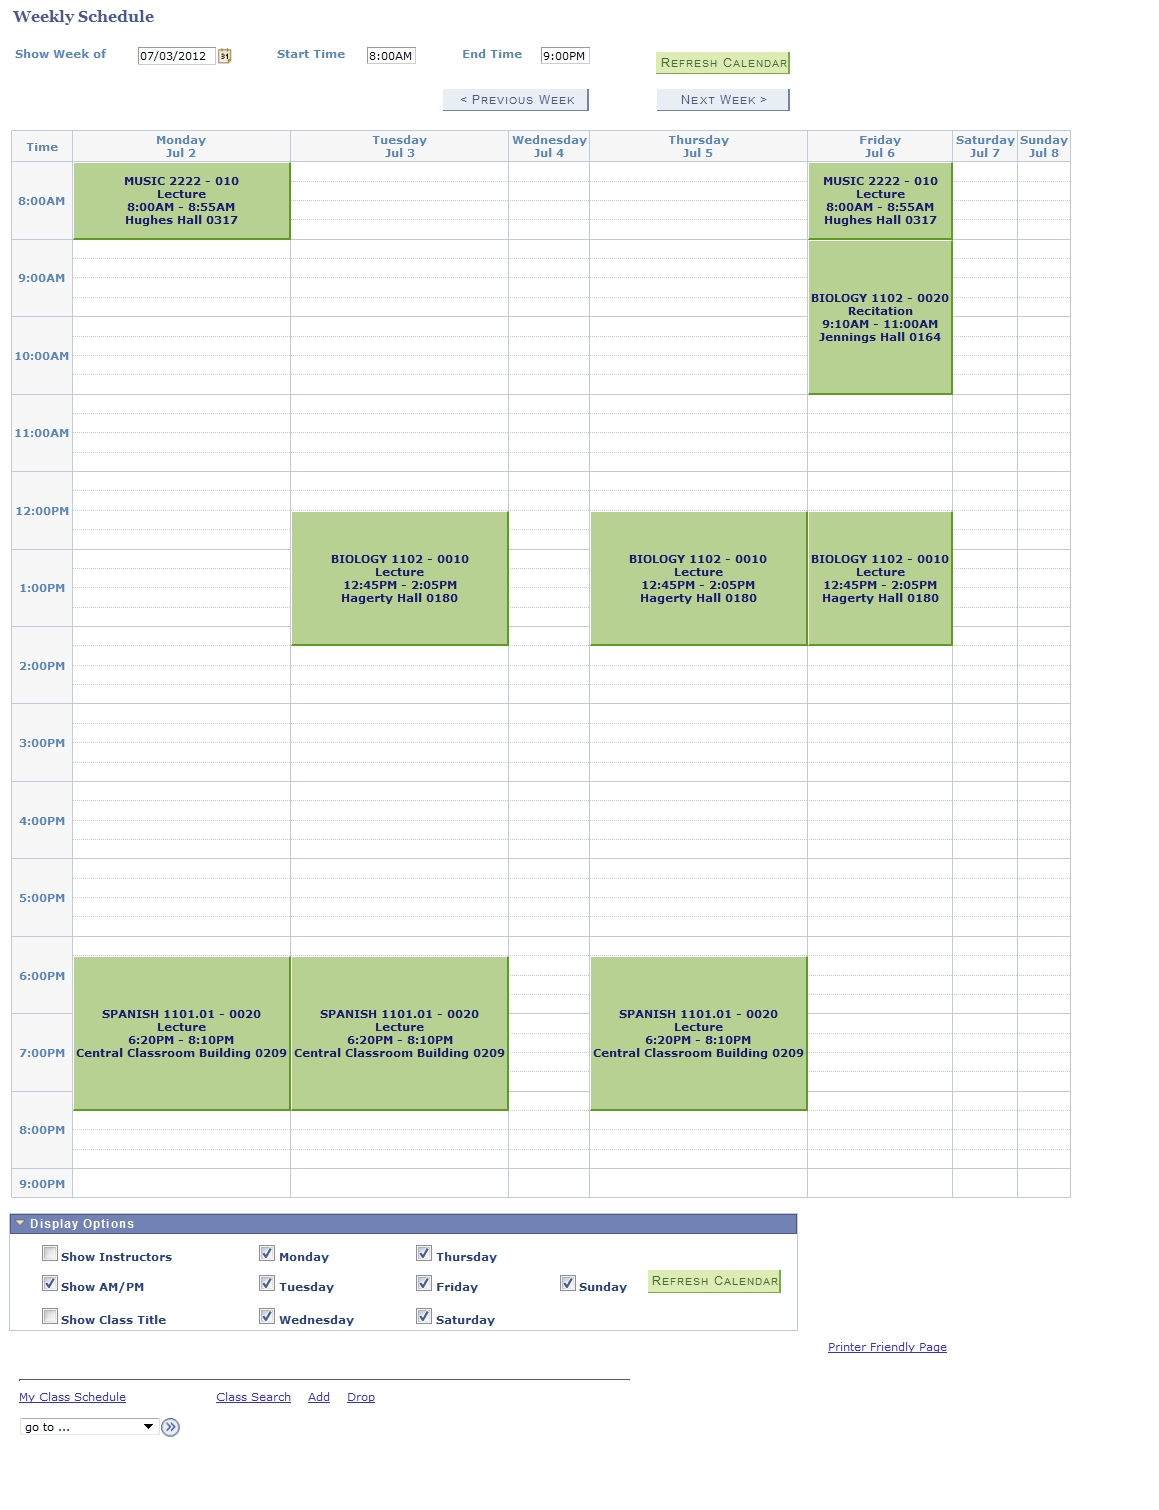 Ohio University Calendar Qualads